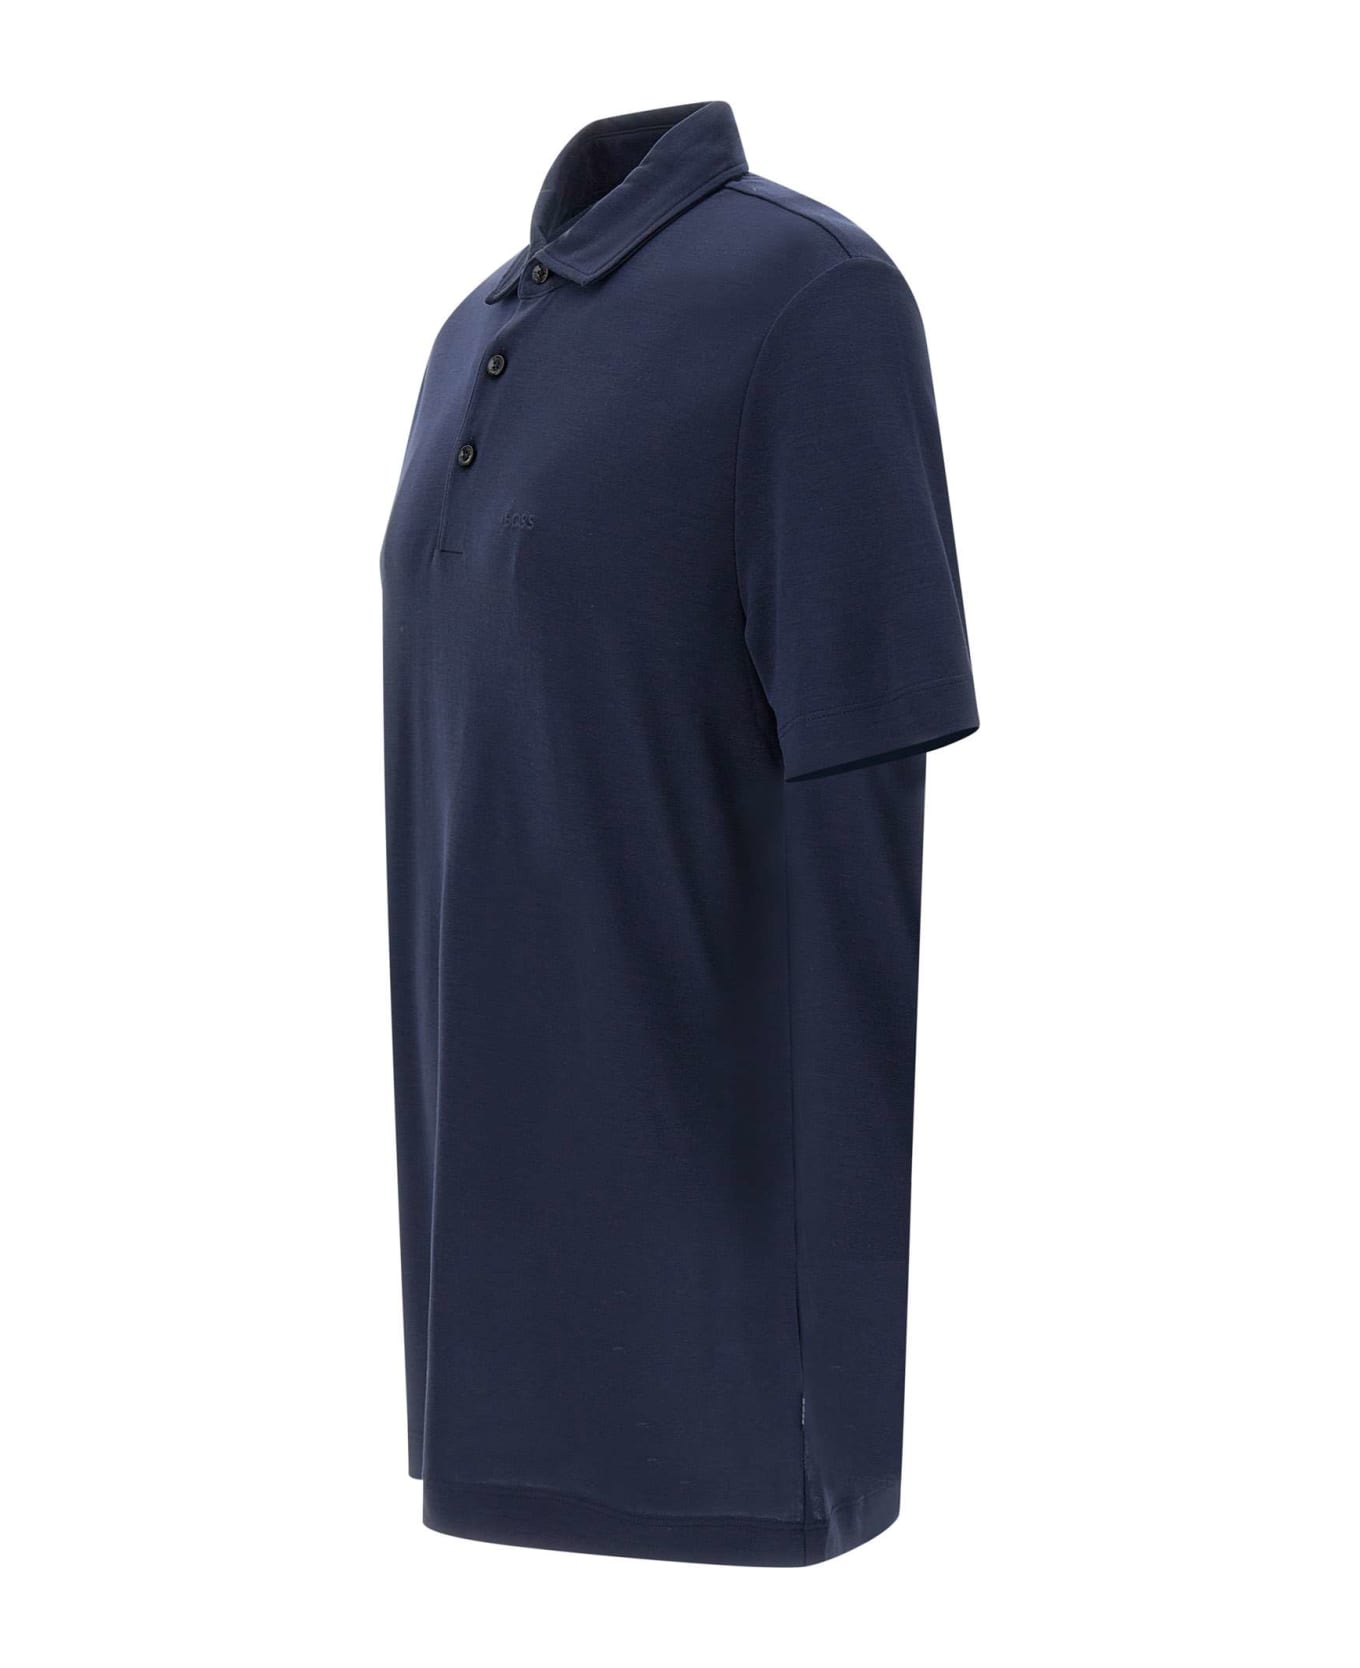 Hugo Boss "press55" Cotton Polo Shirt - BLUE